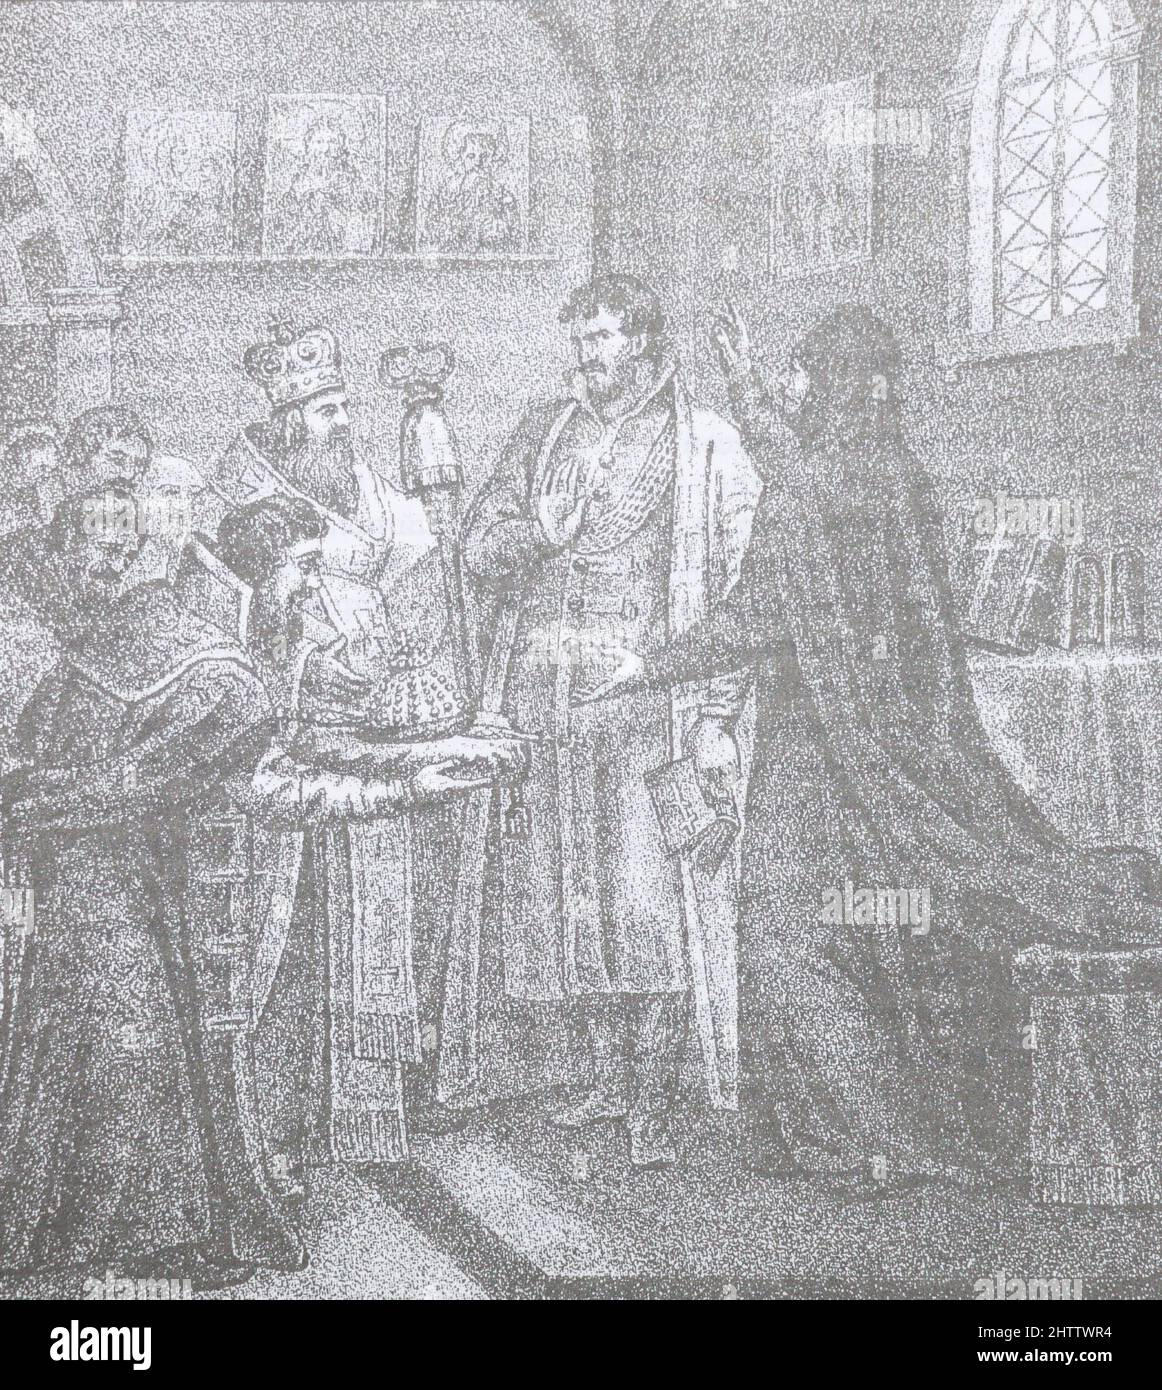 Election of Boris Godunov as Russian Tsar. Medieval engraving. Stock Photo